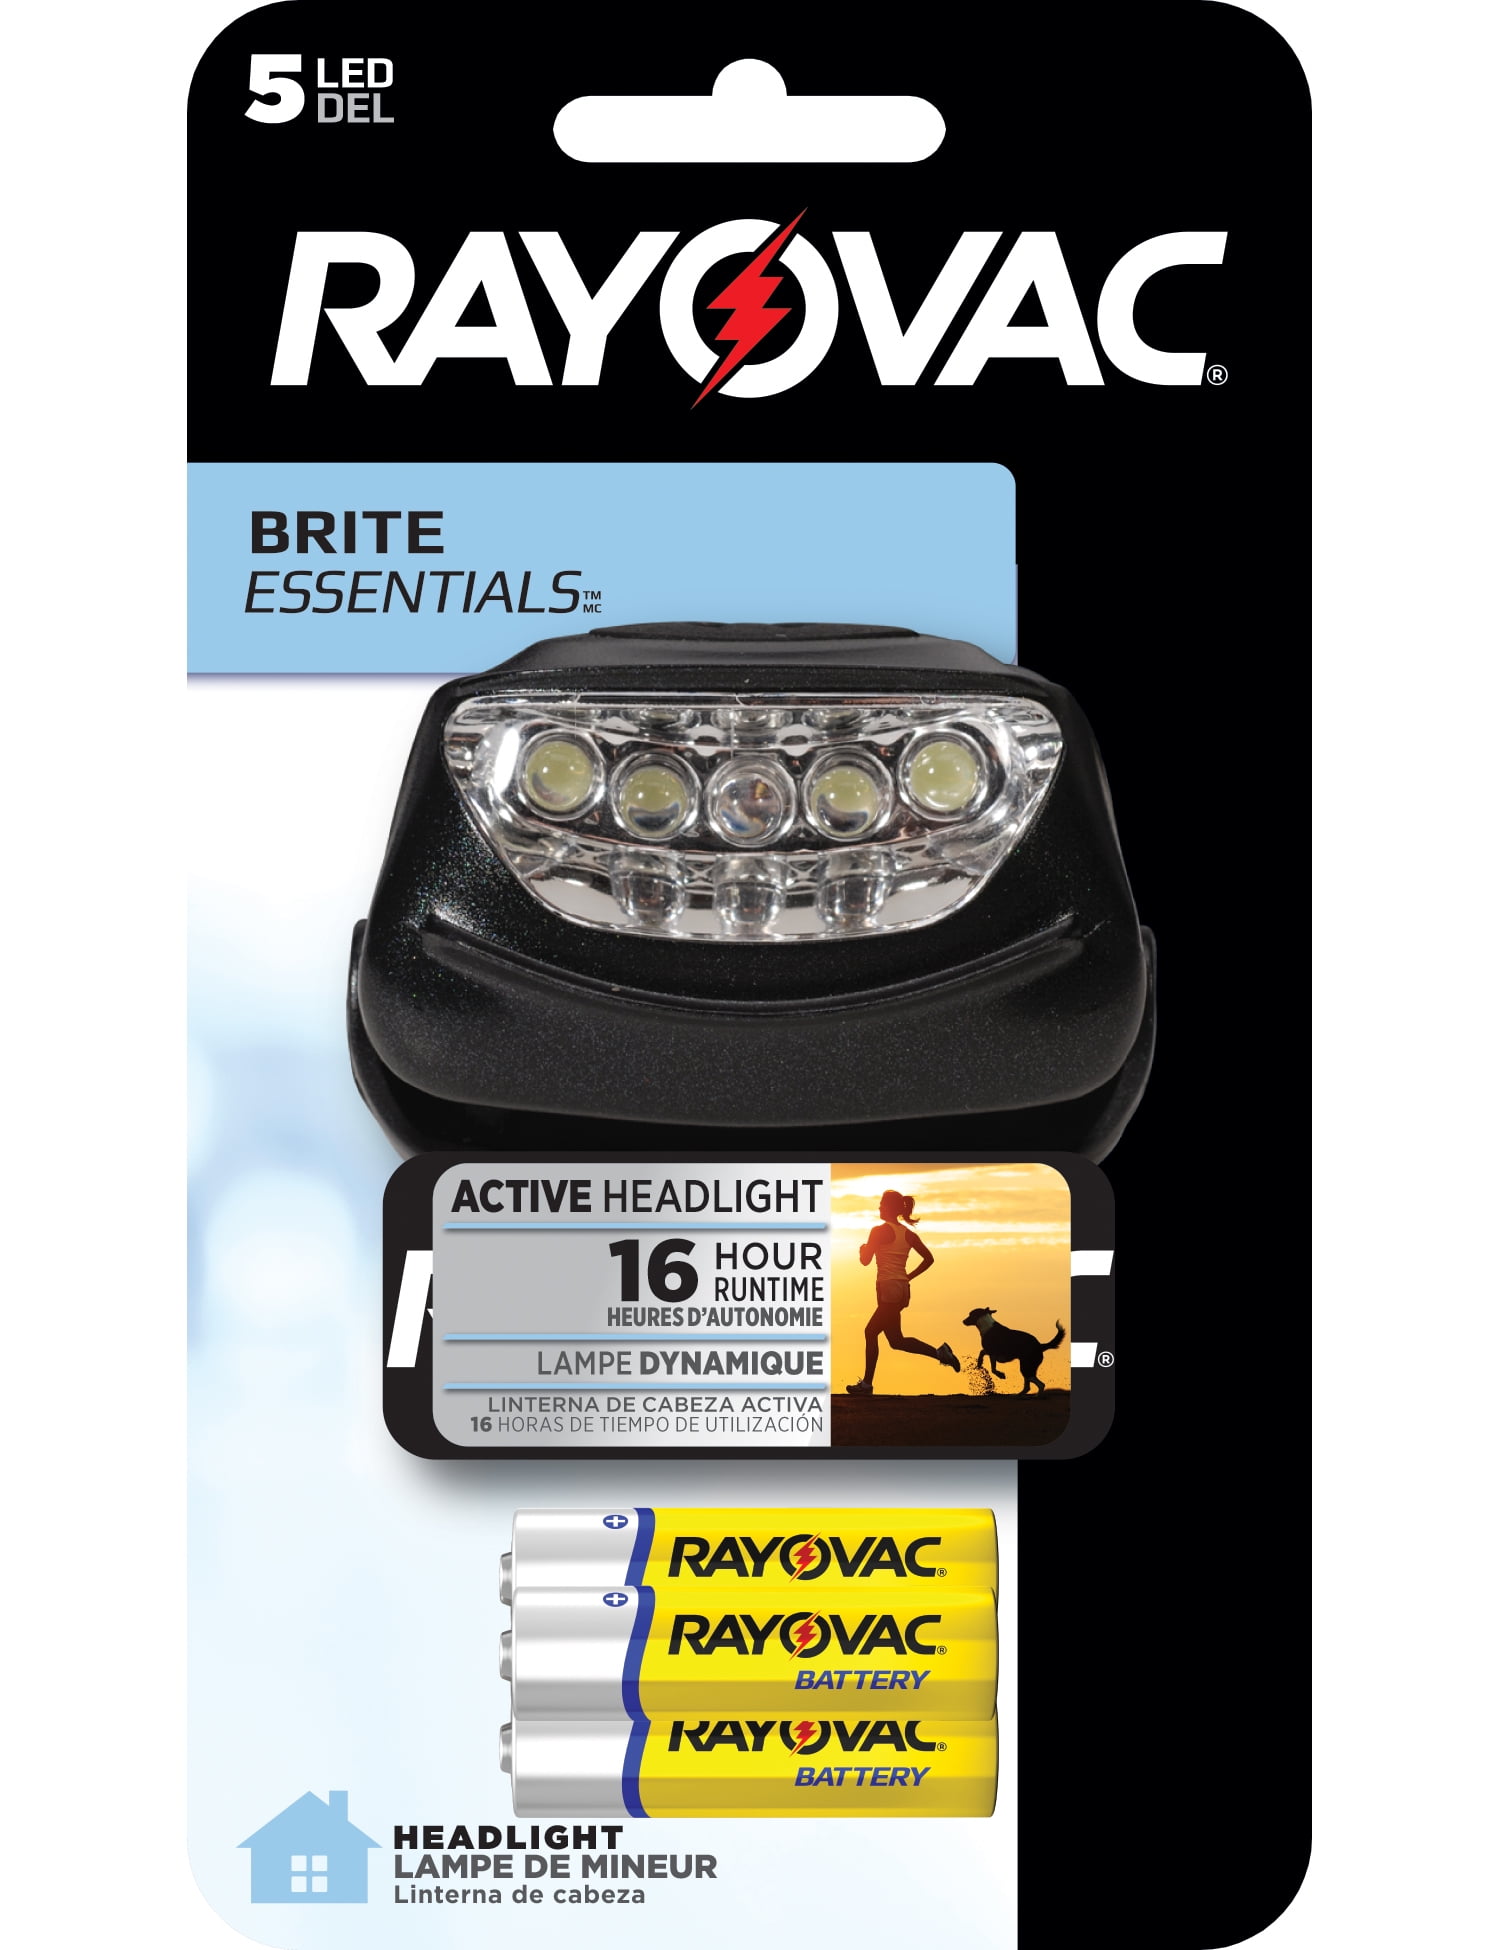 Rayovac 14 Lumen 3 AAA 5 LED Headlight With Batteries BRS5LEDHLT-BB 